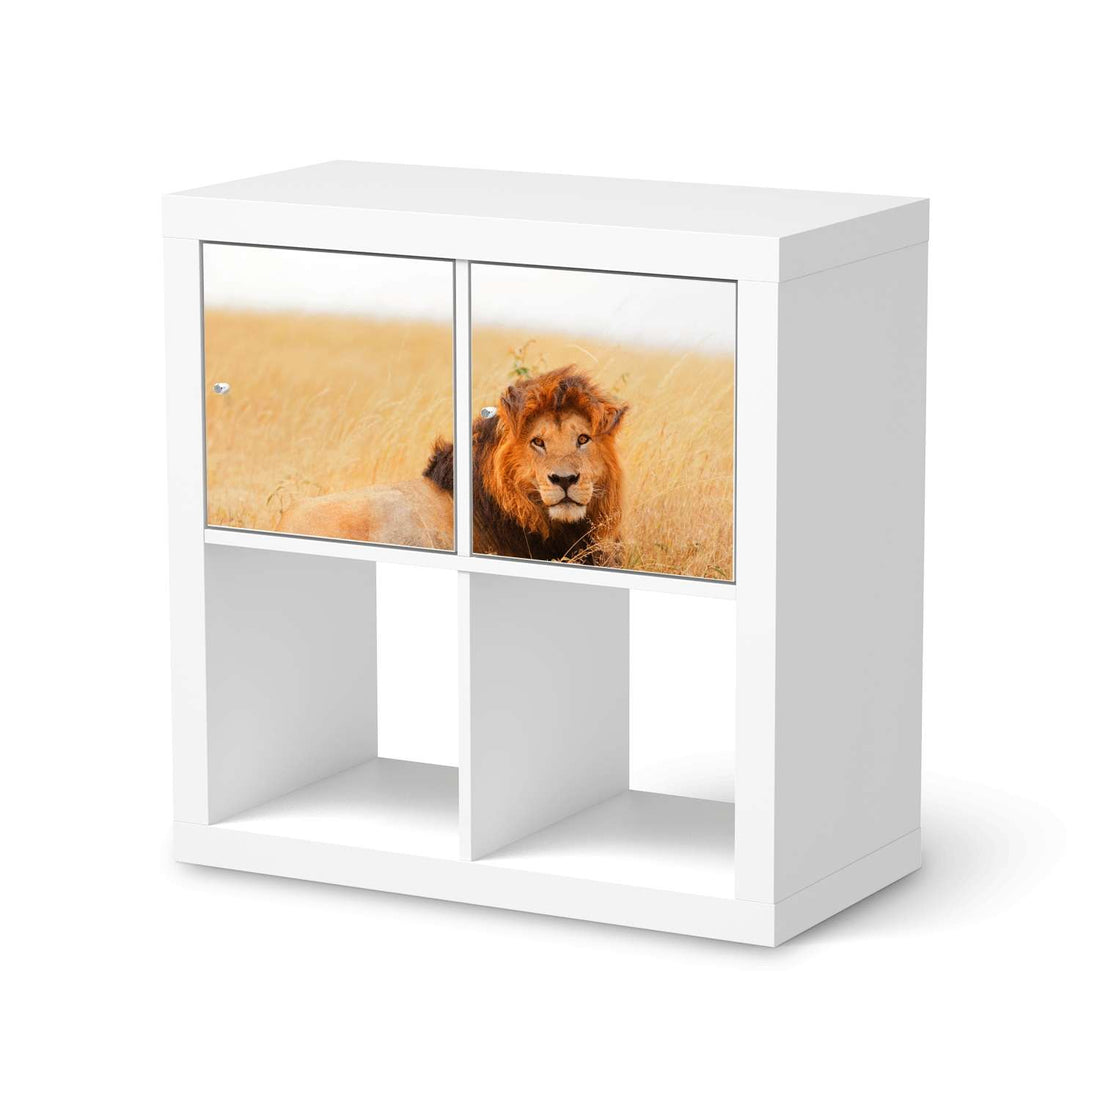 Möbel Klebefolie Lion King - IKEA Expedit Regal 2 Türen Quer  - weiss